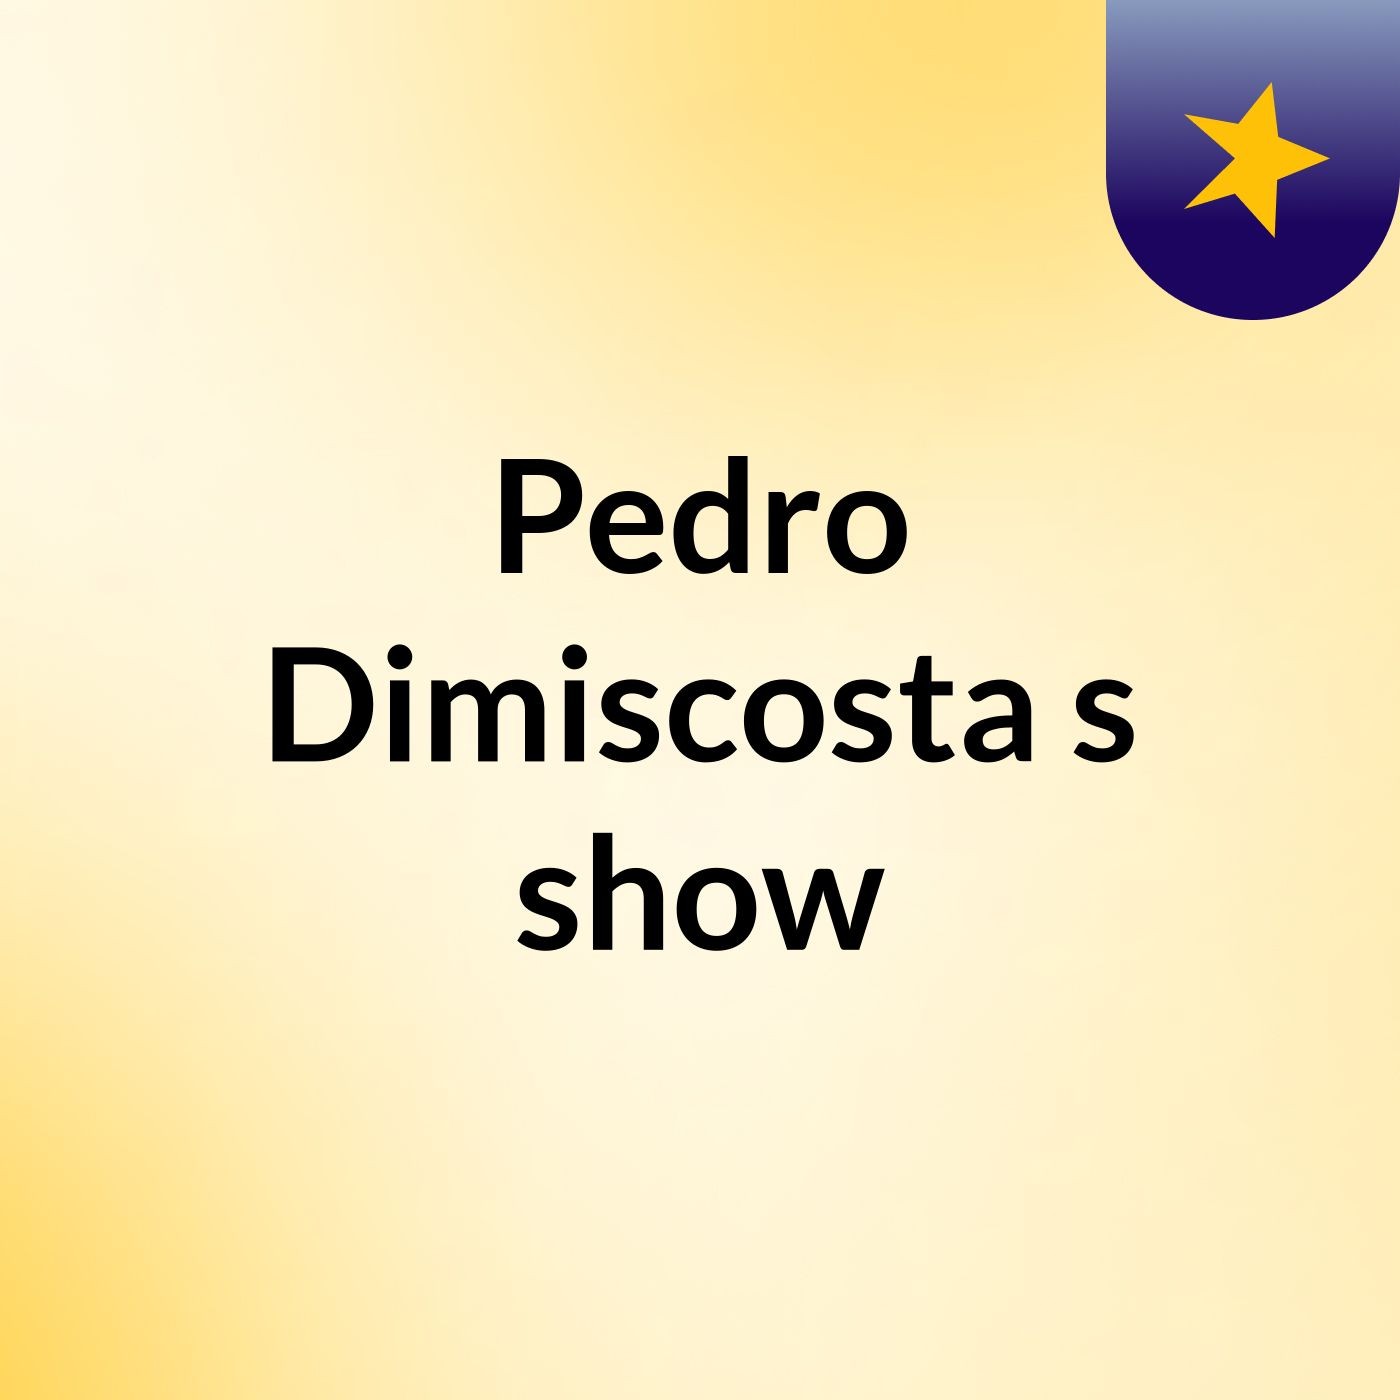 Pedro Dimiscosta's show